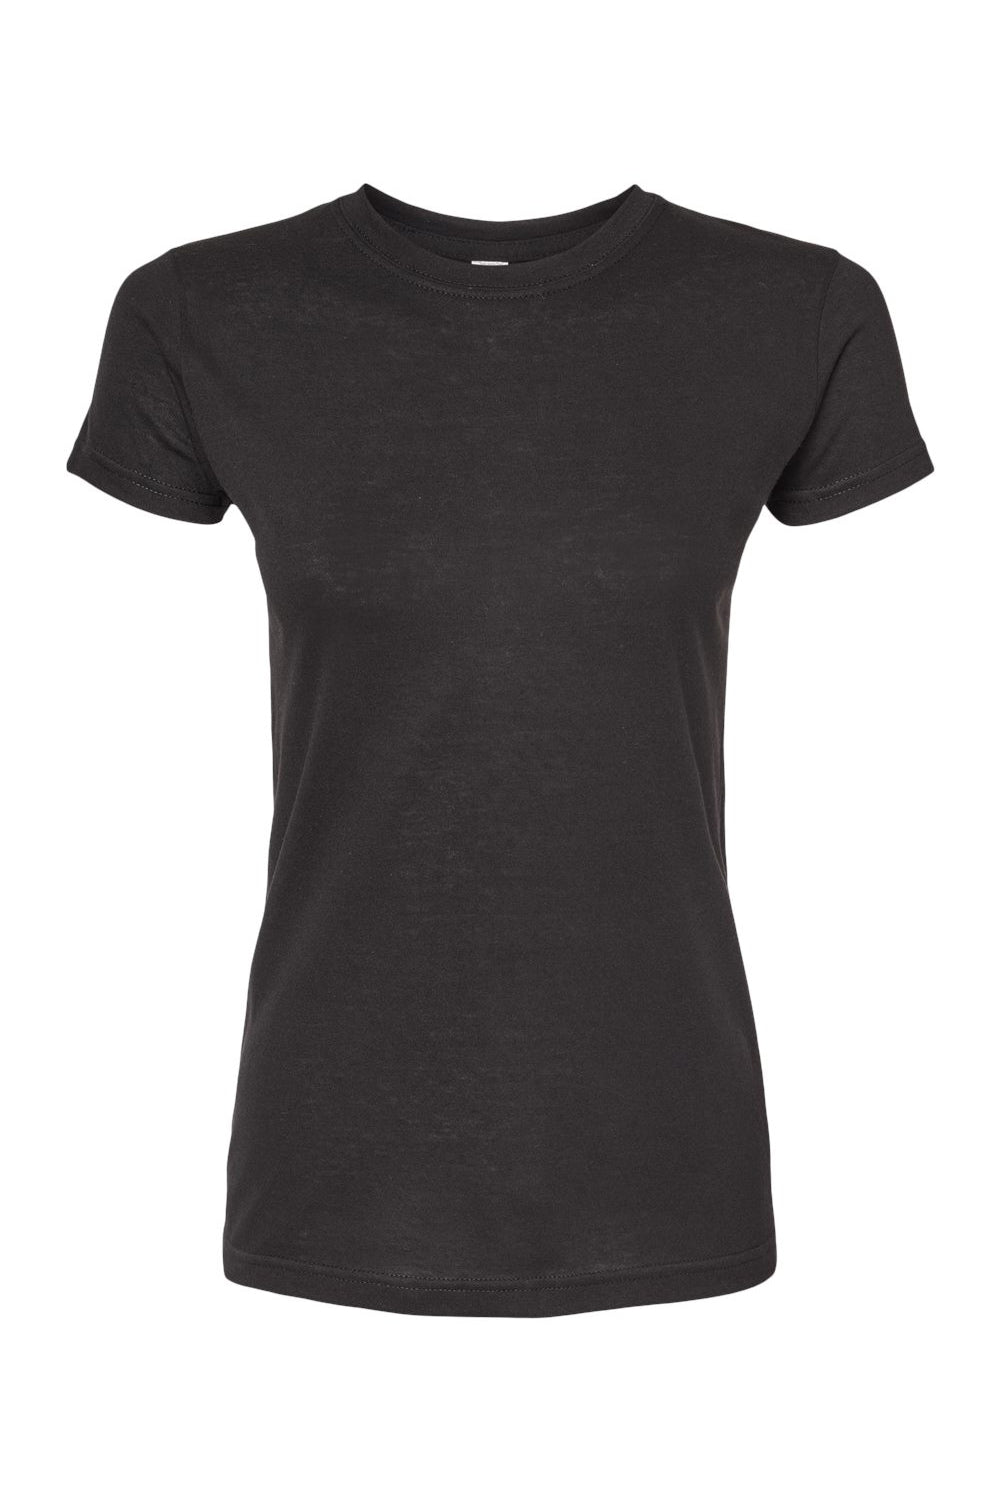 Tultex 240 Womens Poly-Rich Short Sleeve Crewneck T-Shirt Black Flat Front